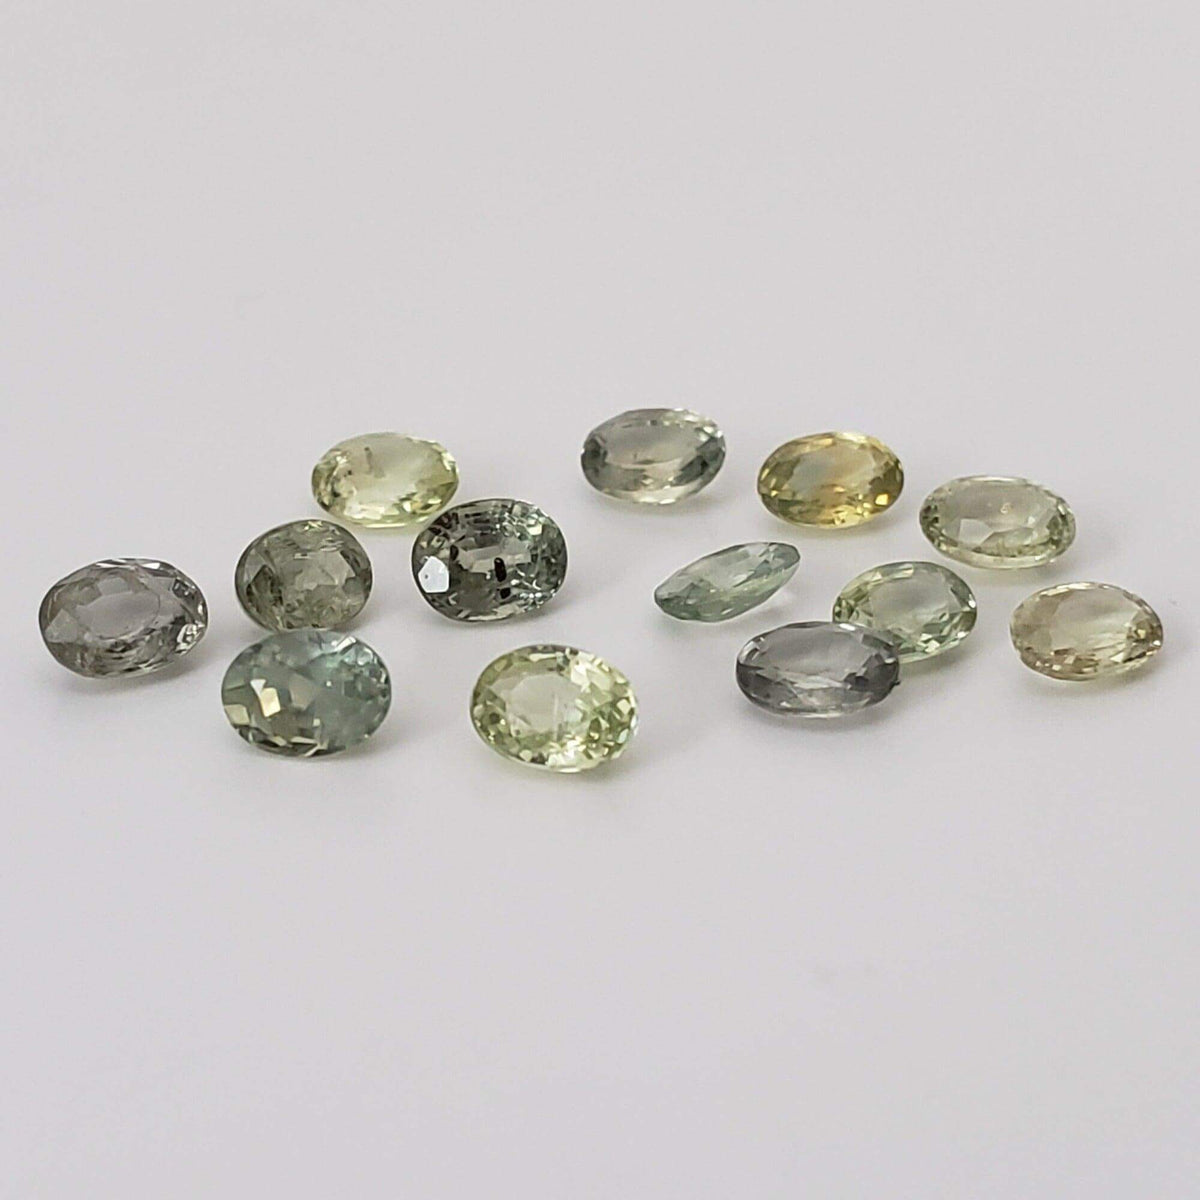 Sapphire | 13 Piece Gemstone Lot | Oval Cut | Green to Yellow | 3.6-4.0x2.6-3.0mm 2.8tcw